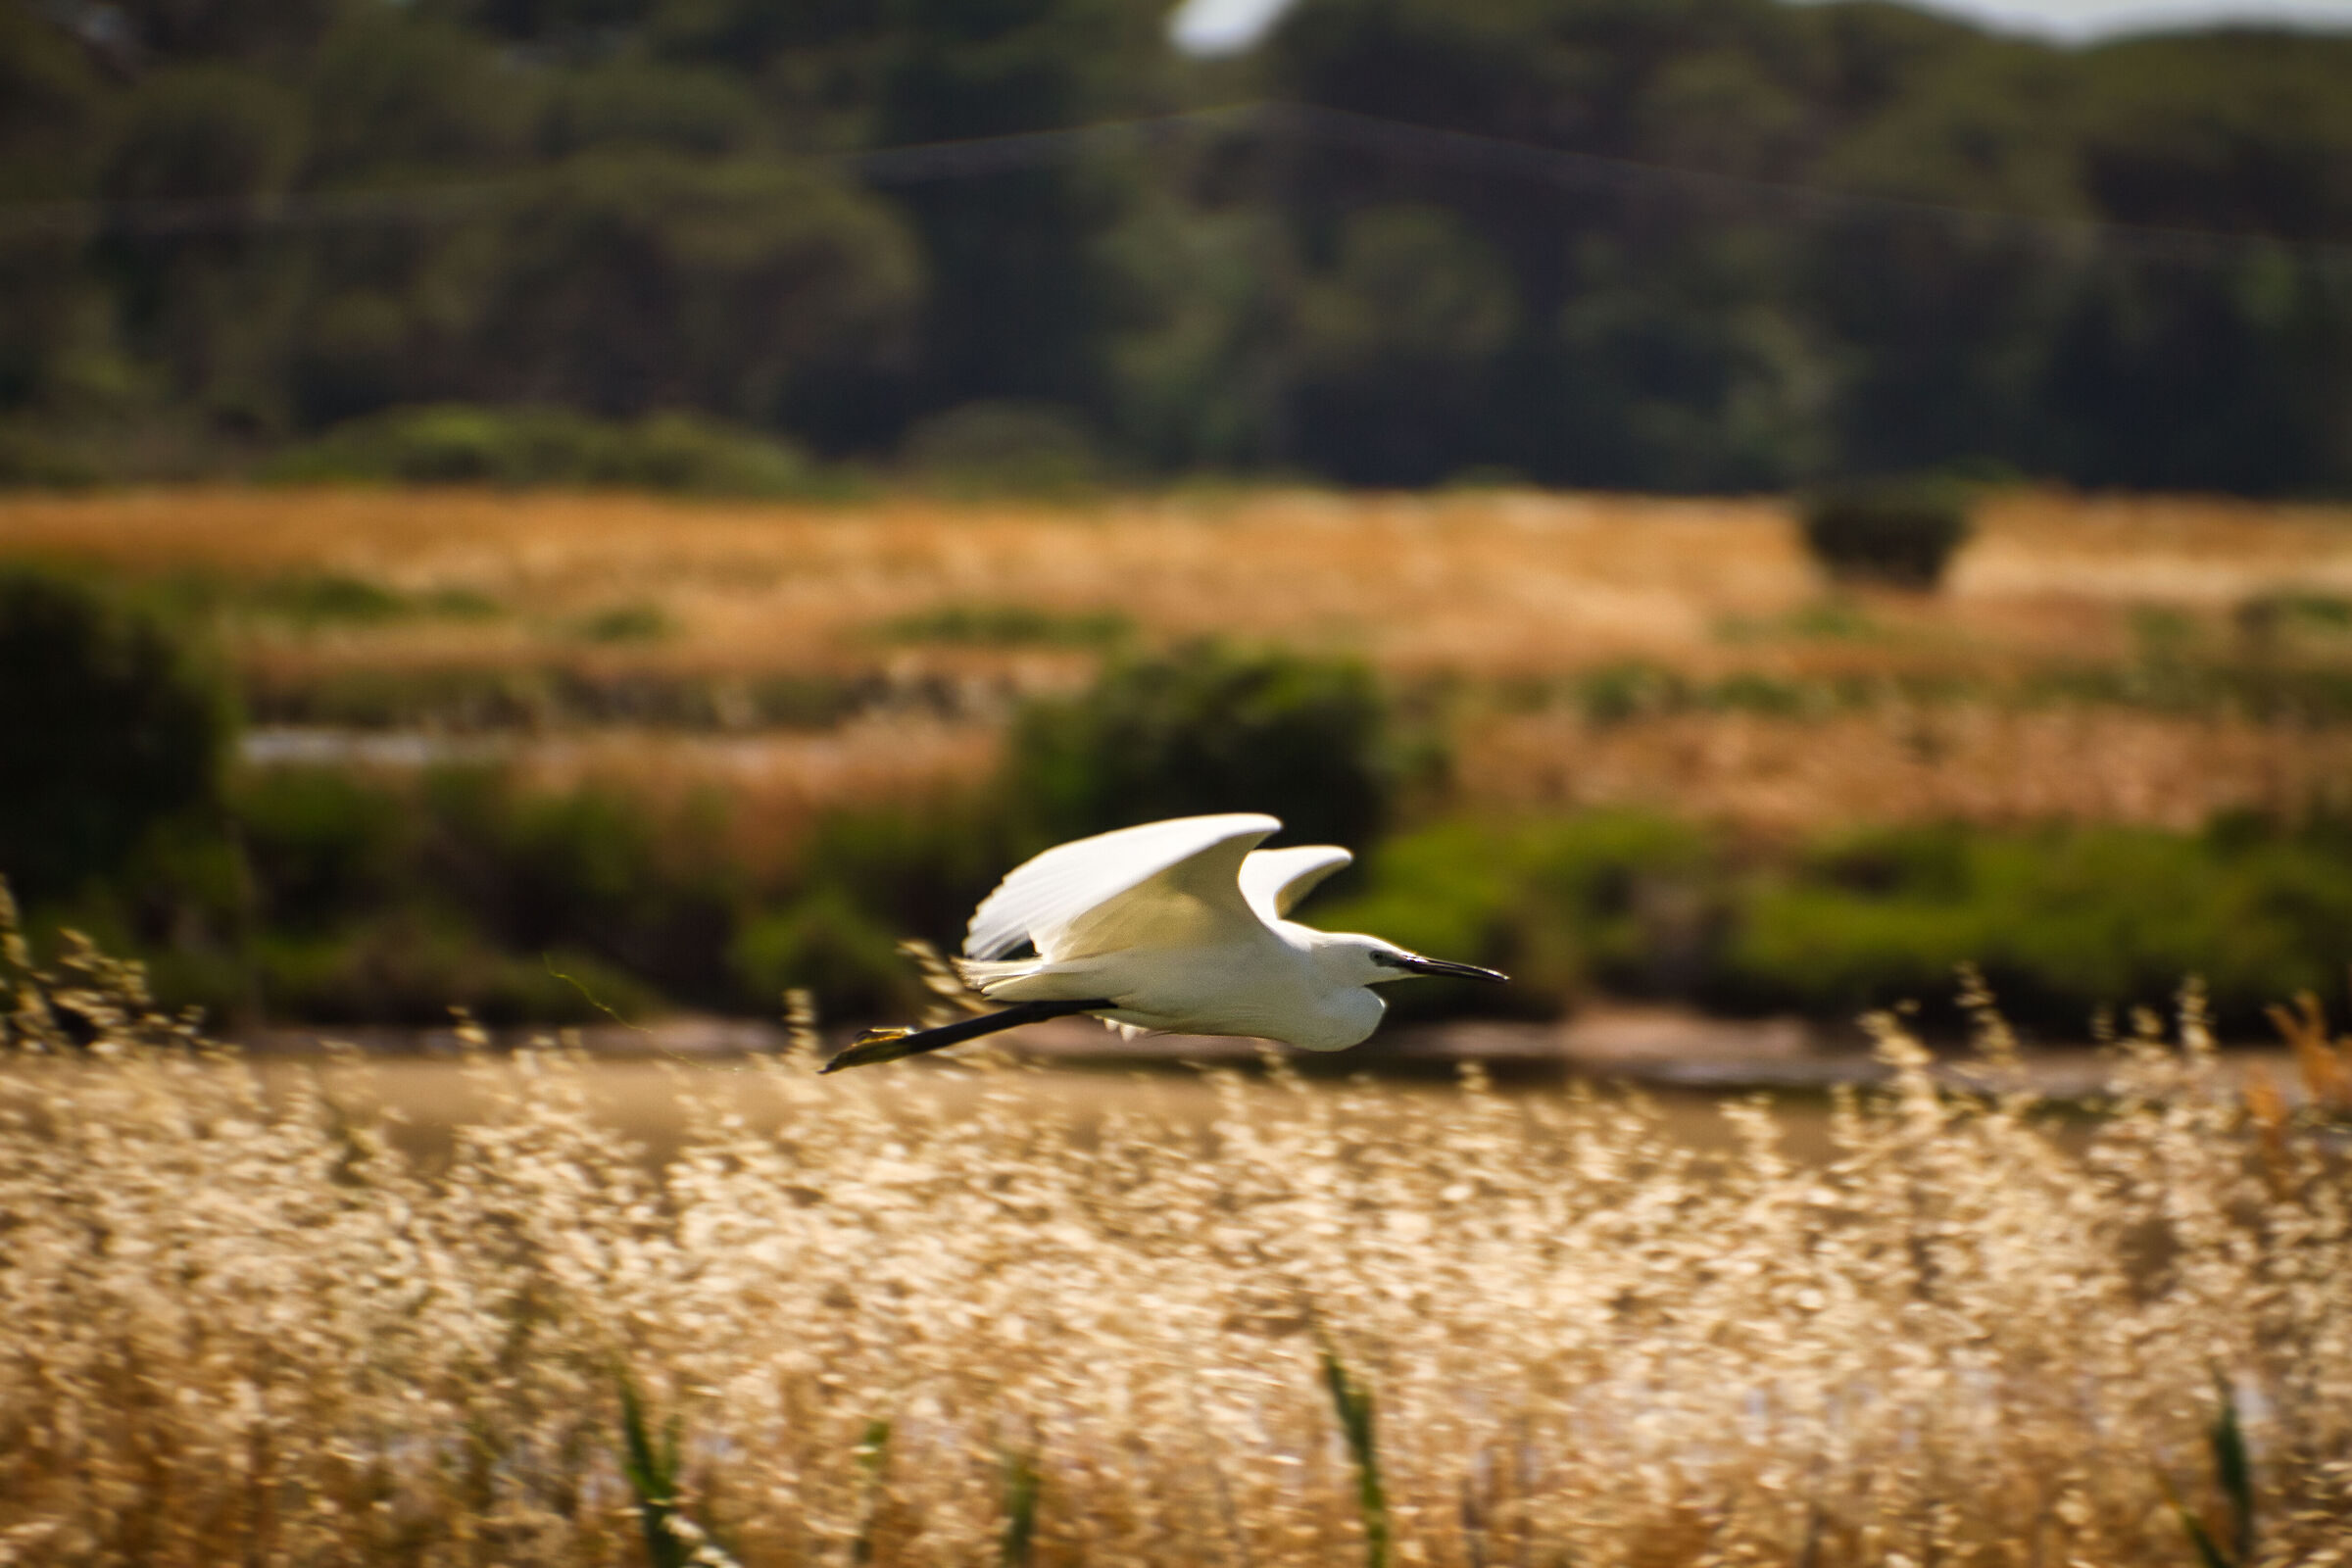 Egrets in flight...